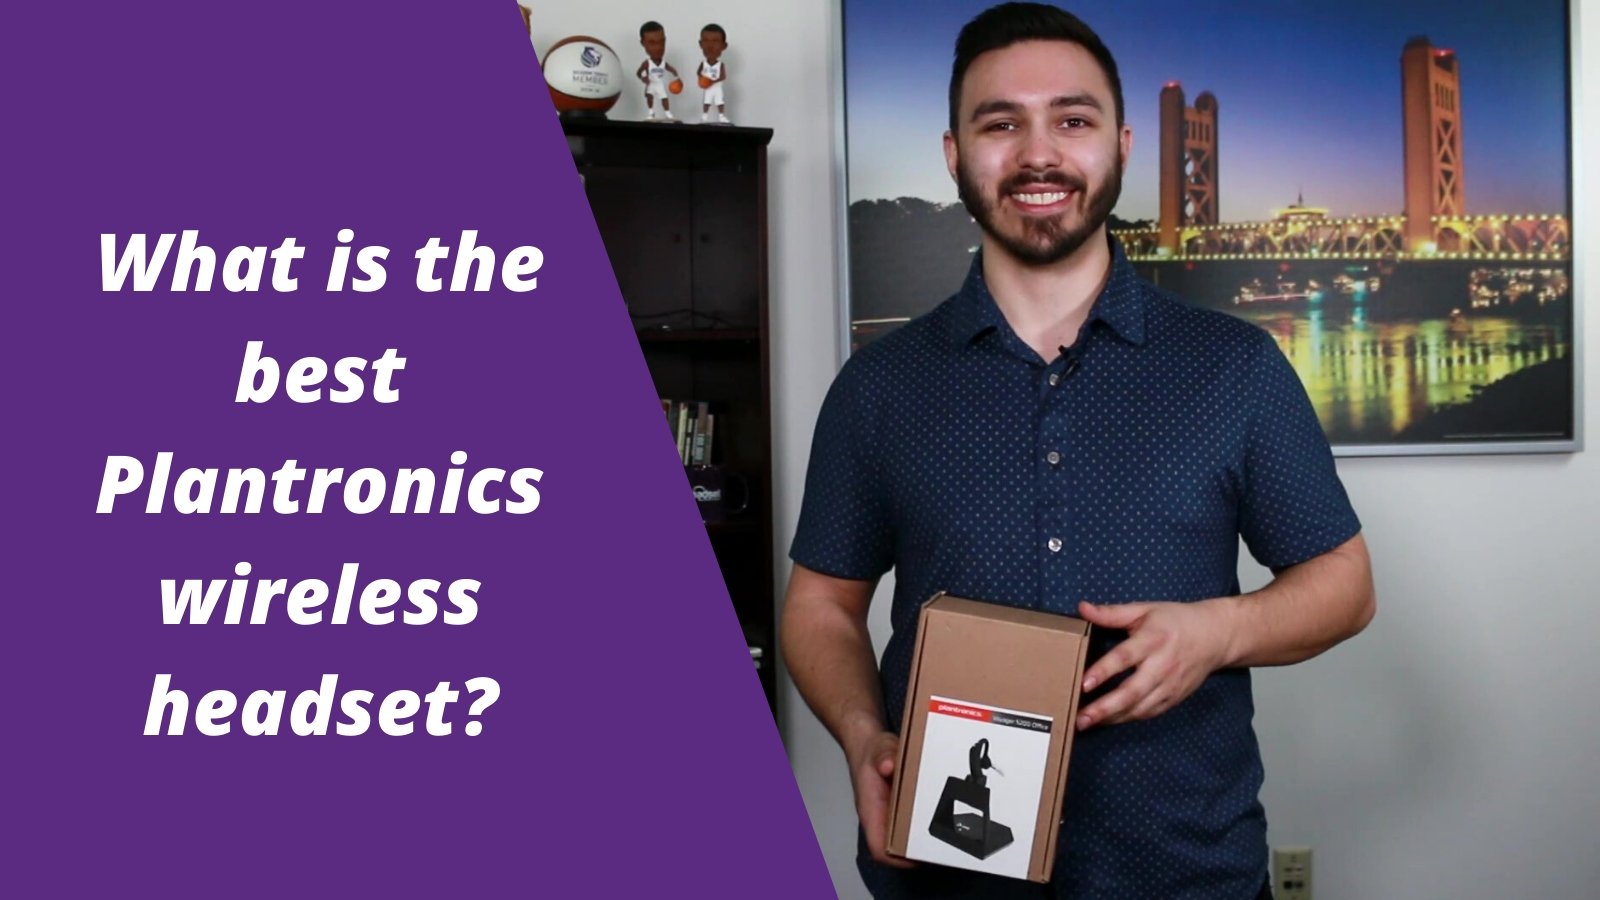 What Is the Best Plantronics Wireless Headset? - Headset Advisor